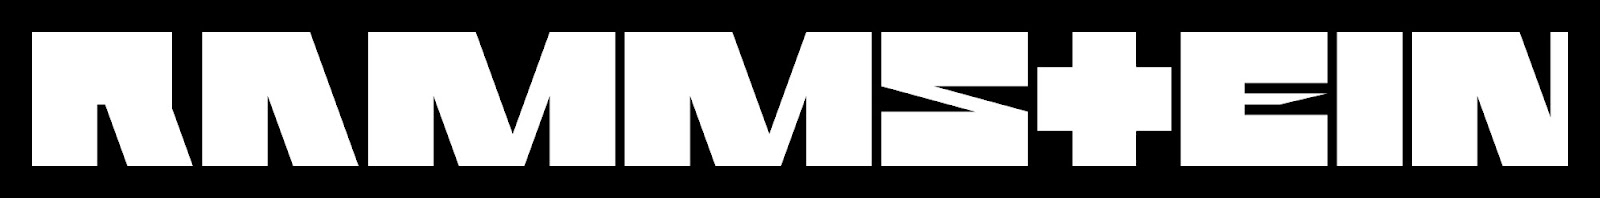 Rammstein_logo